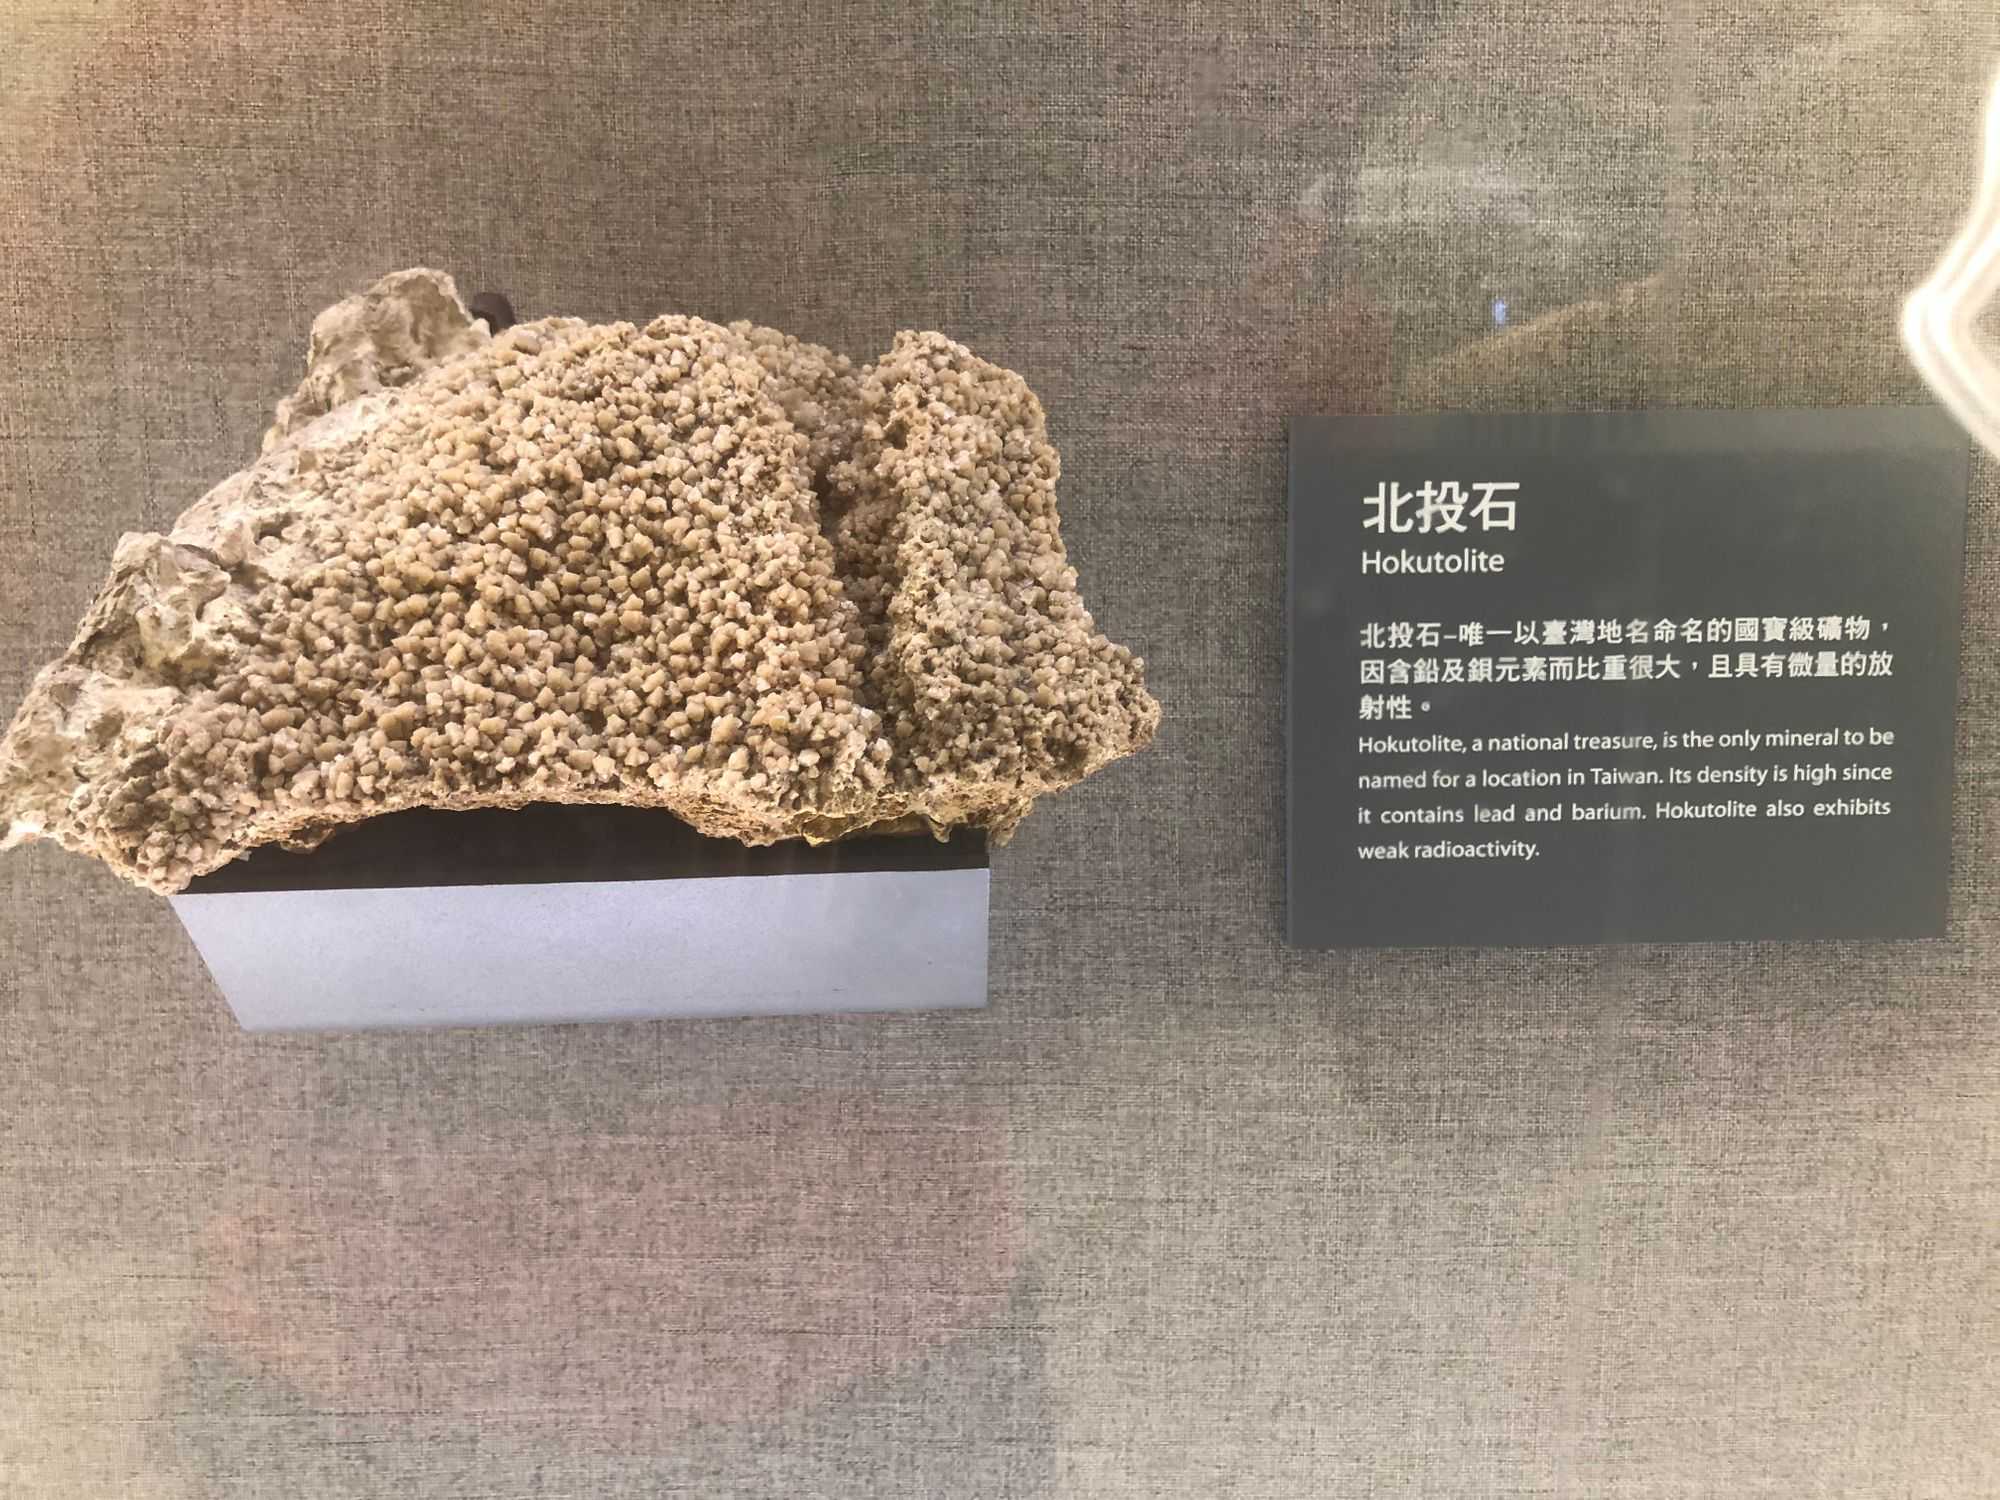 National Taiwan Museum. Hokutolite (Image by author)